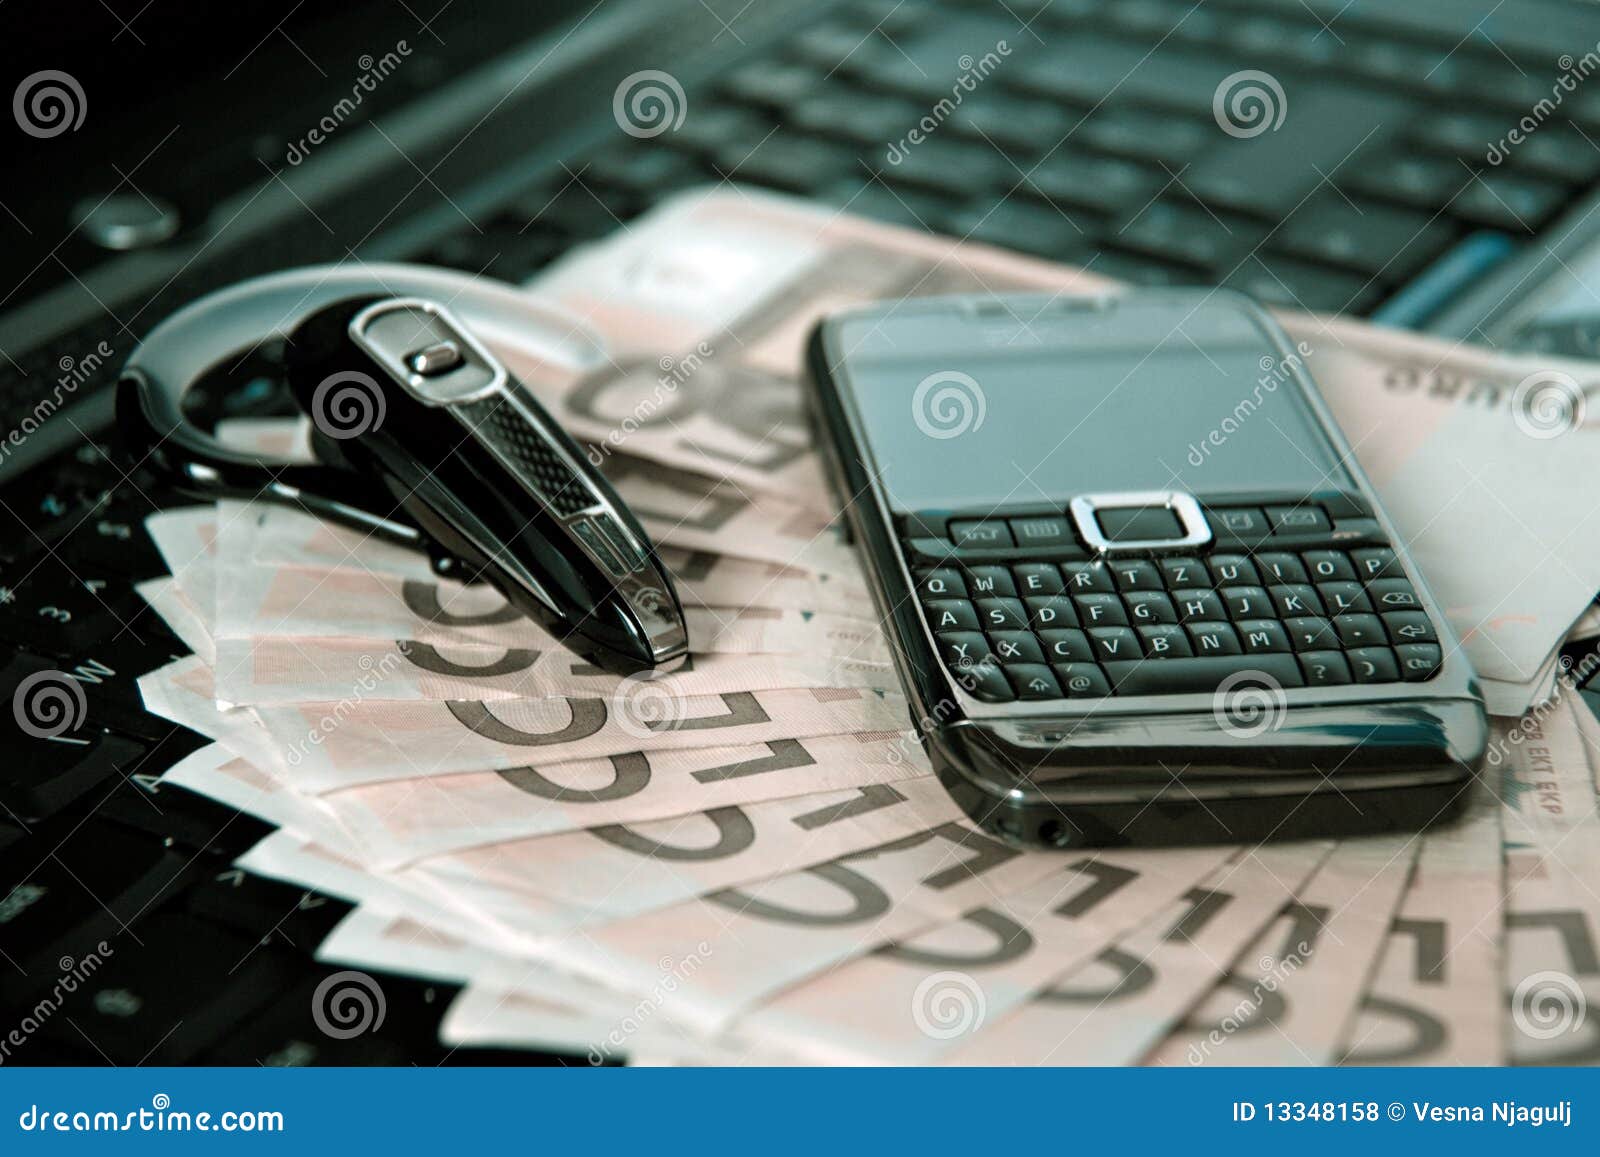 Cash Euro Money On The Keyboard Stock Image ...